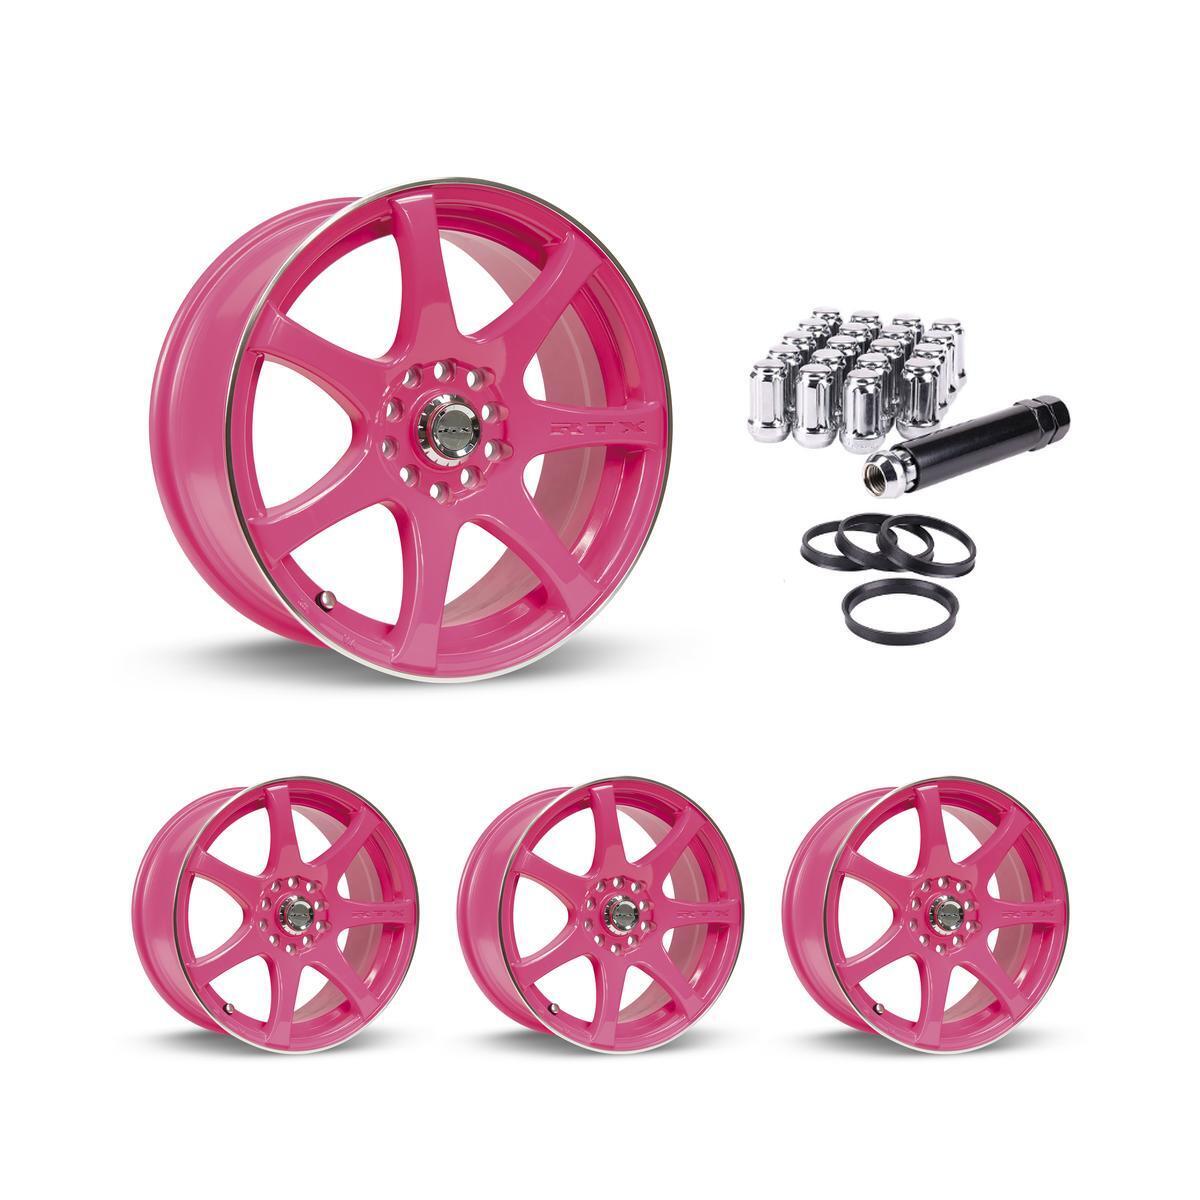 Wheel Rims Set with Chrome Lug Nuts Kit for 92-96 Mazda MX-3 P813994 15 inch